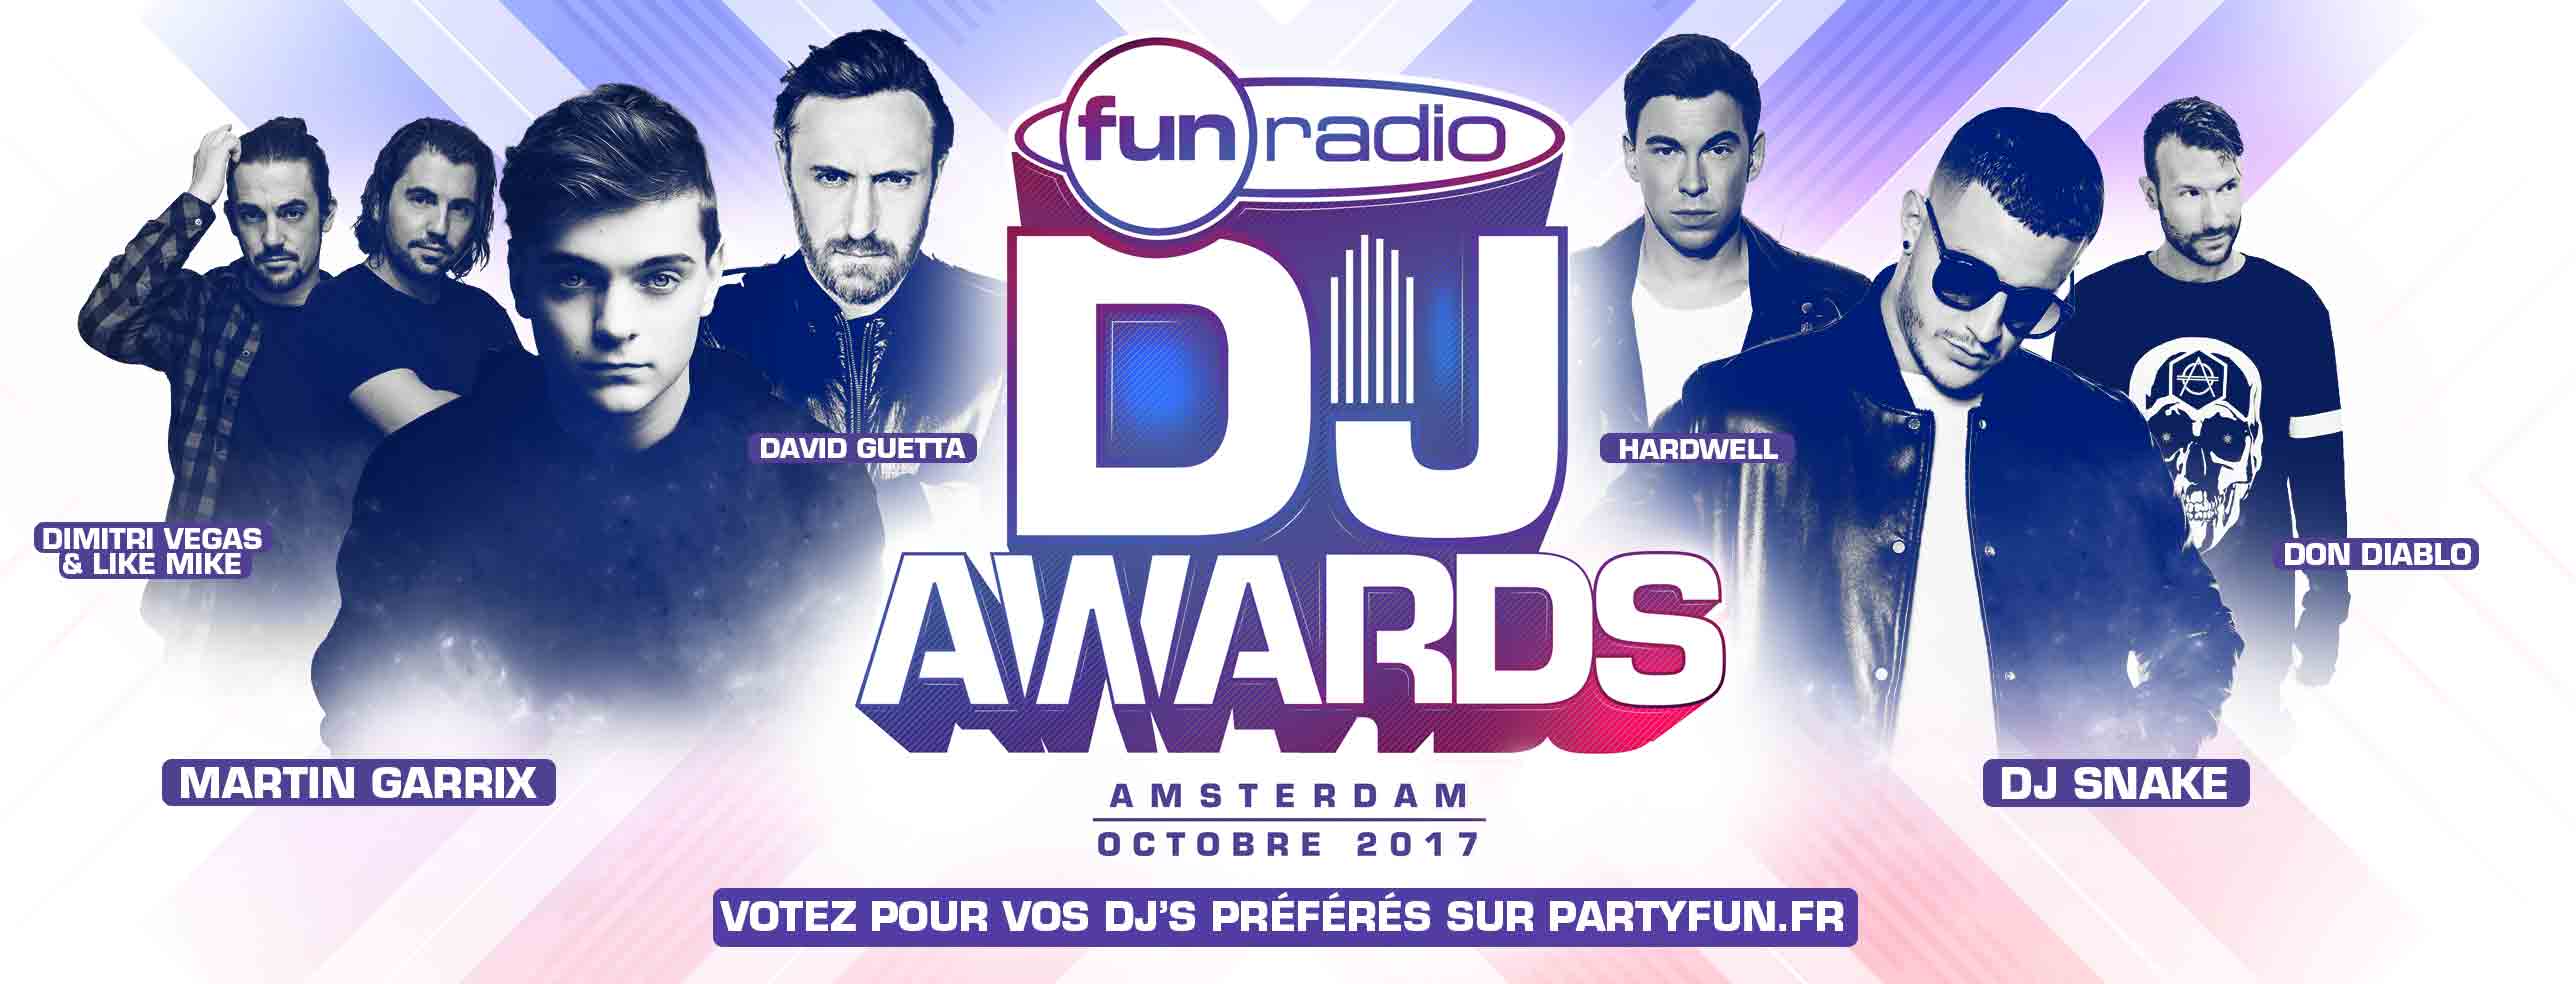 Les Fun Radio DJ Awards auront lieu à Amsterdam